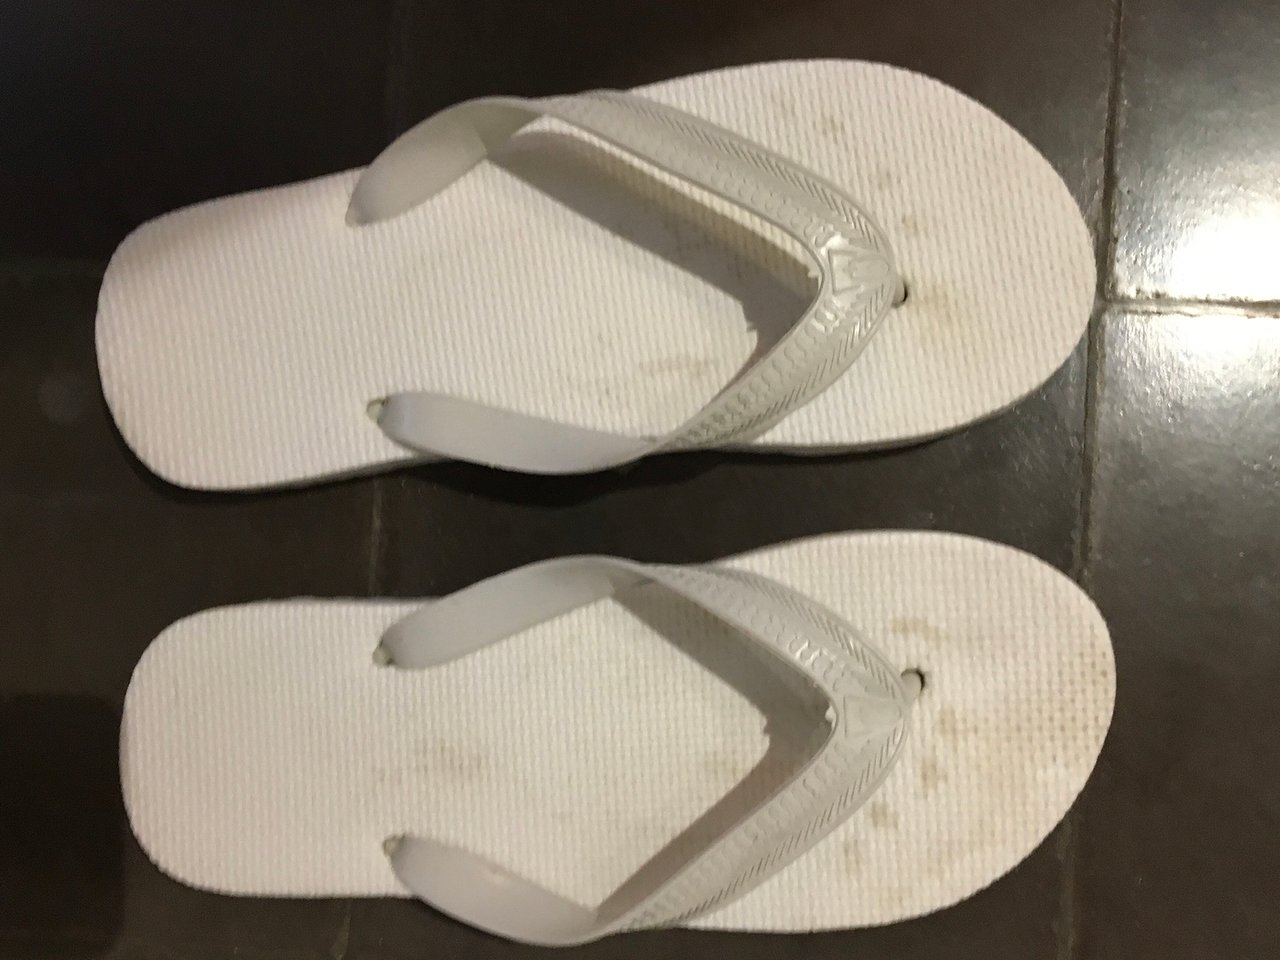 ahmad marar recommends Dirty White Flip Flops